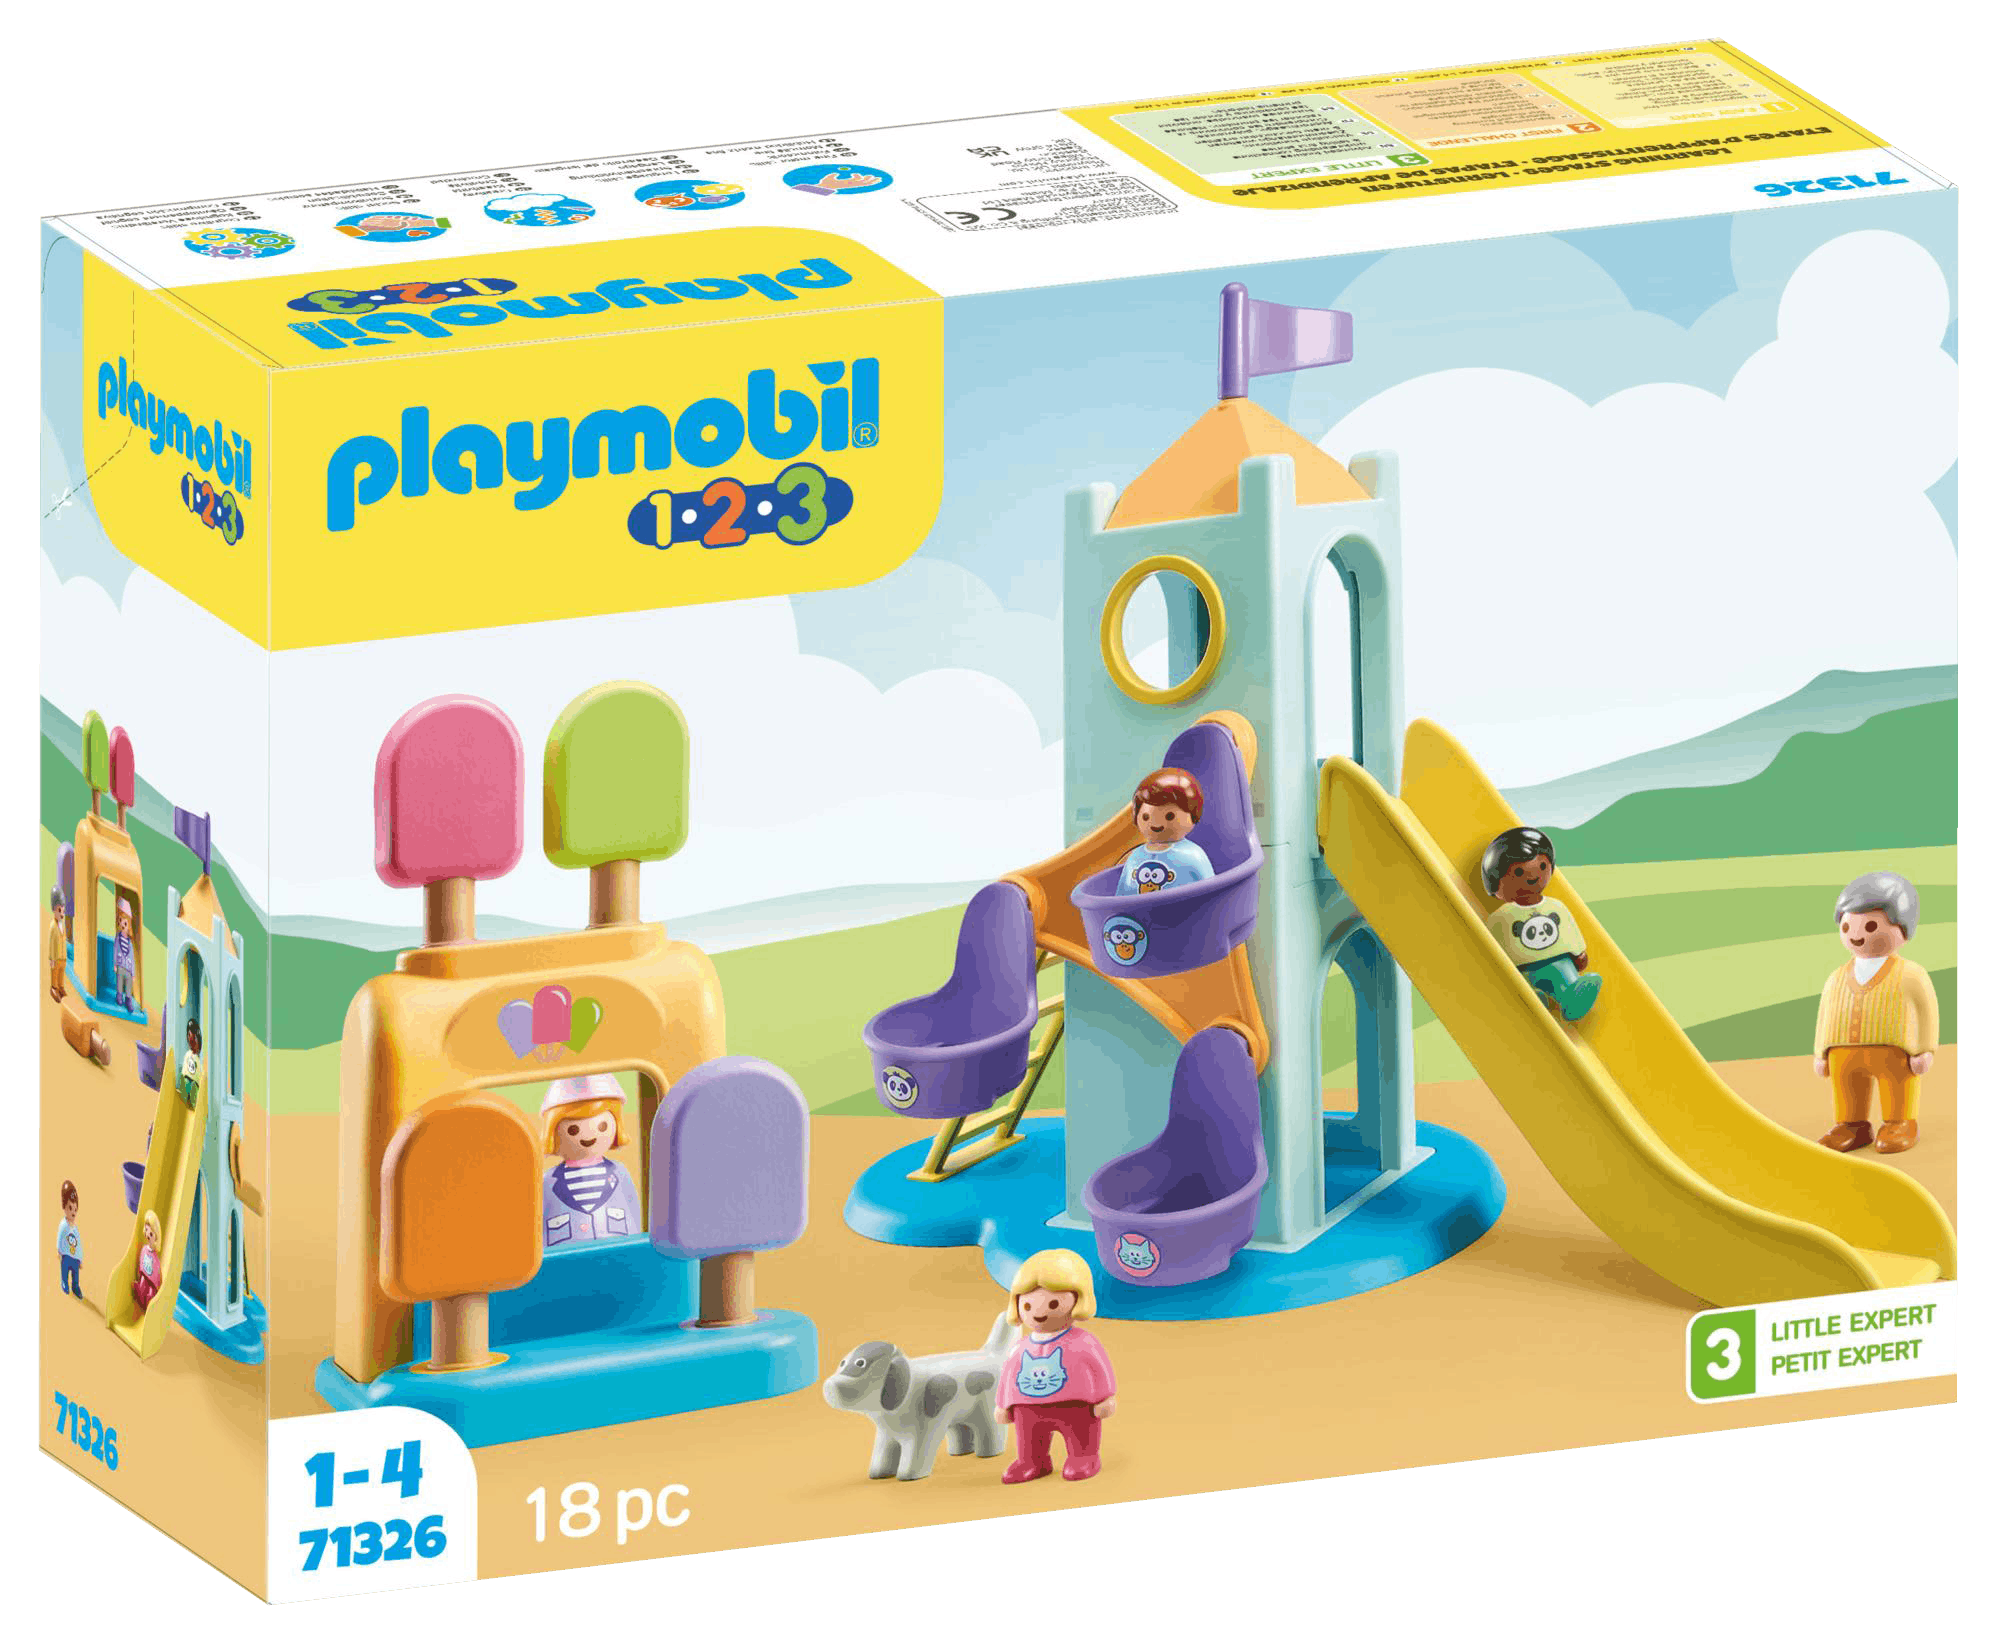 Playmobil 1.2.3 Terrain D'aventure - 71326